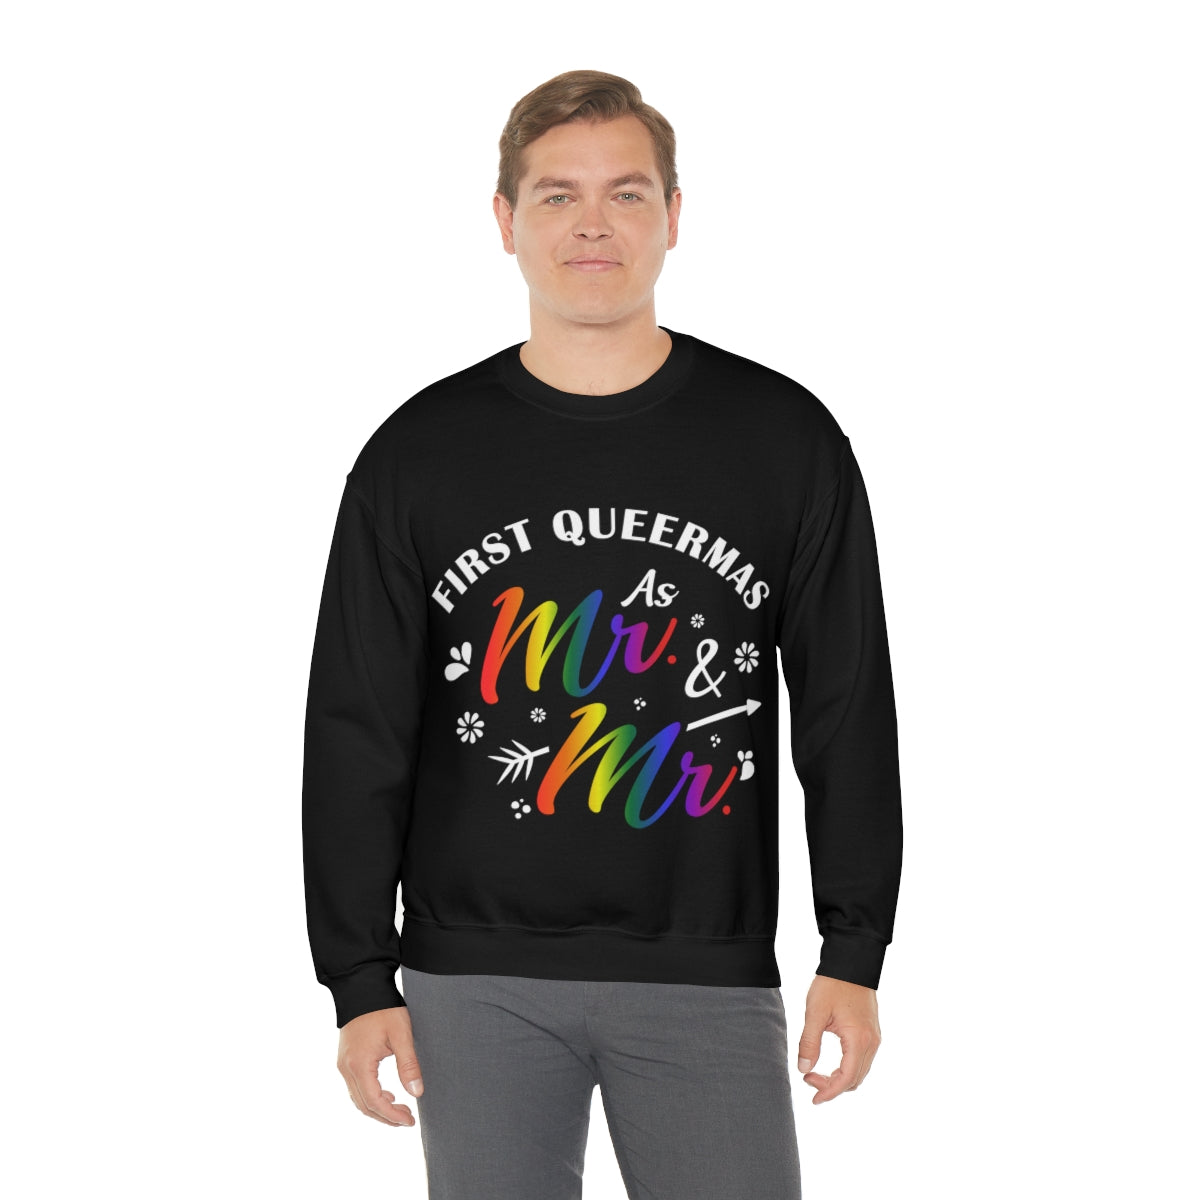 Unisex Christmas LGBTQ Heavy Blend Crewneck Sweatshirt - First Queermas As Mr. & Mr. Printify